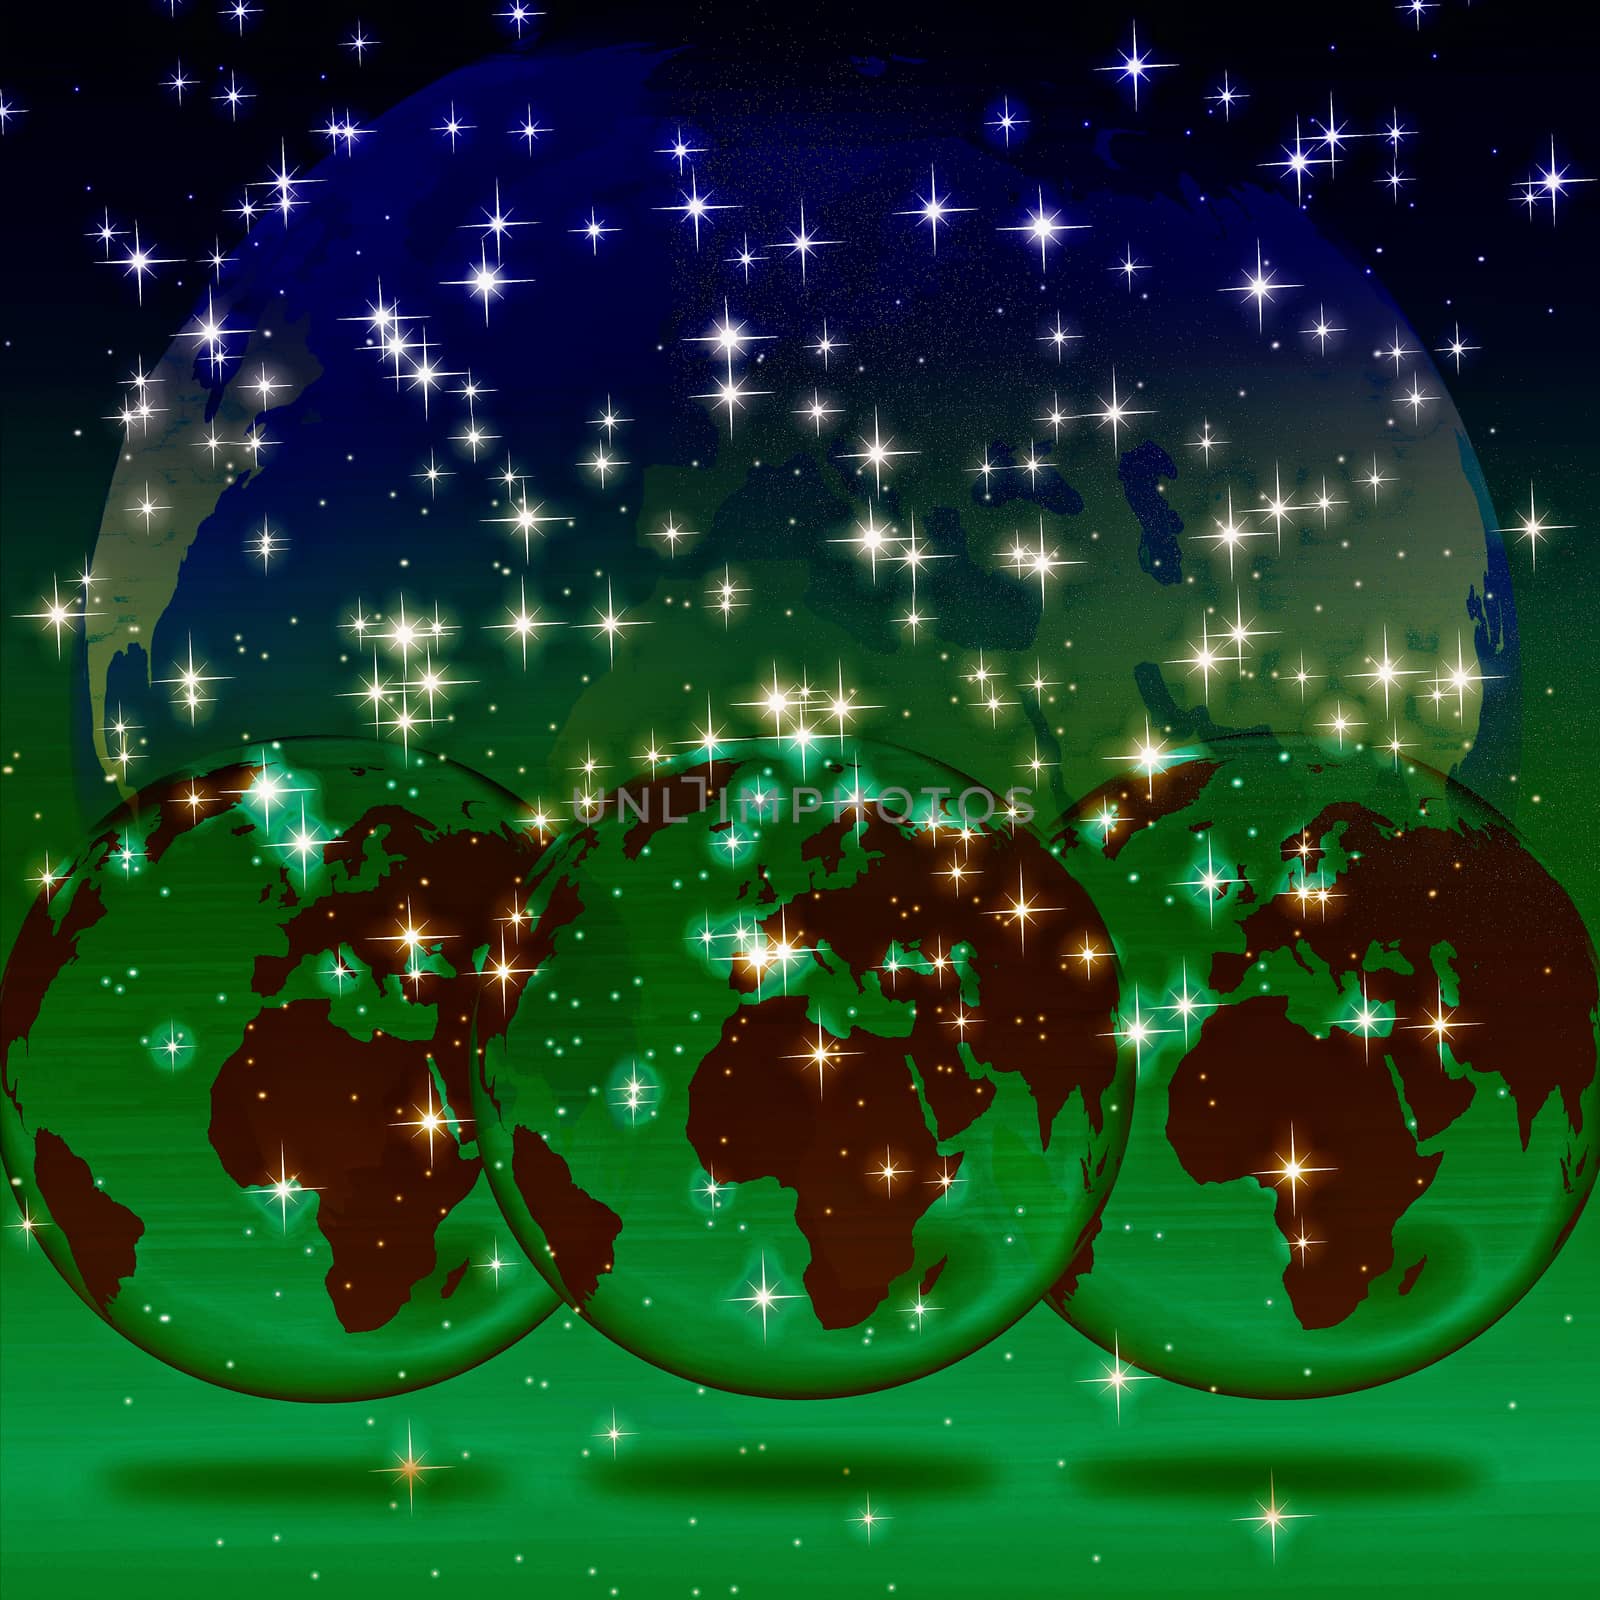 Background with globe